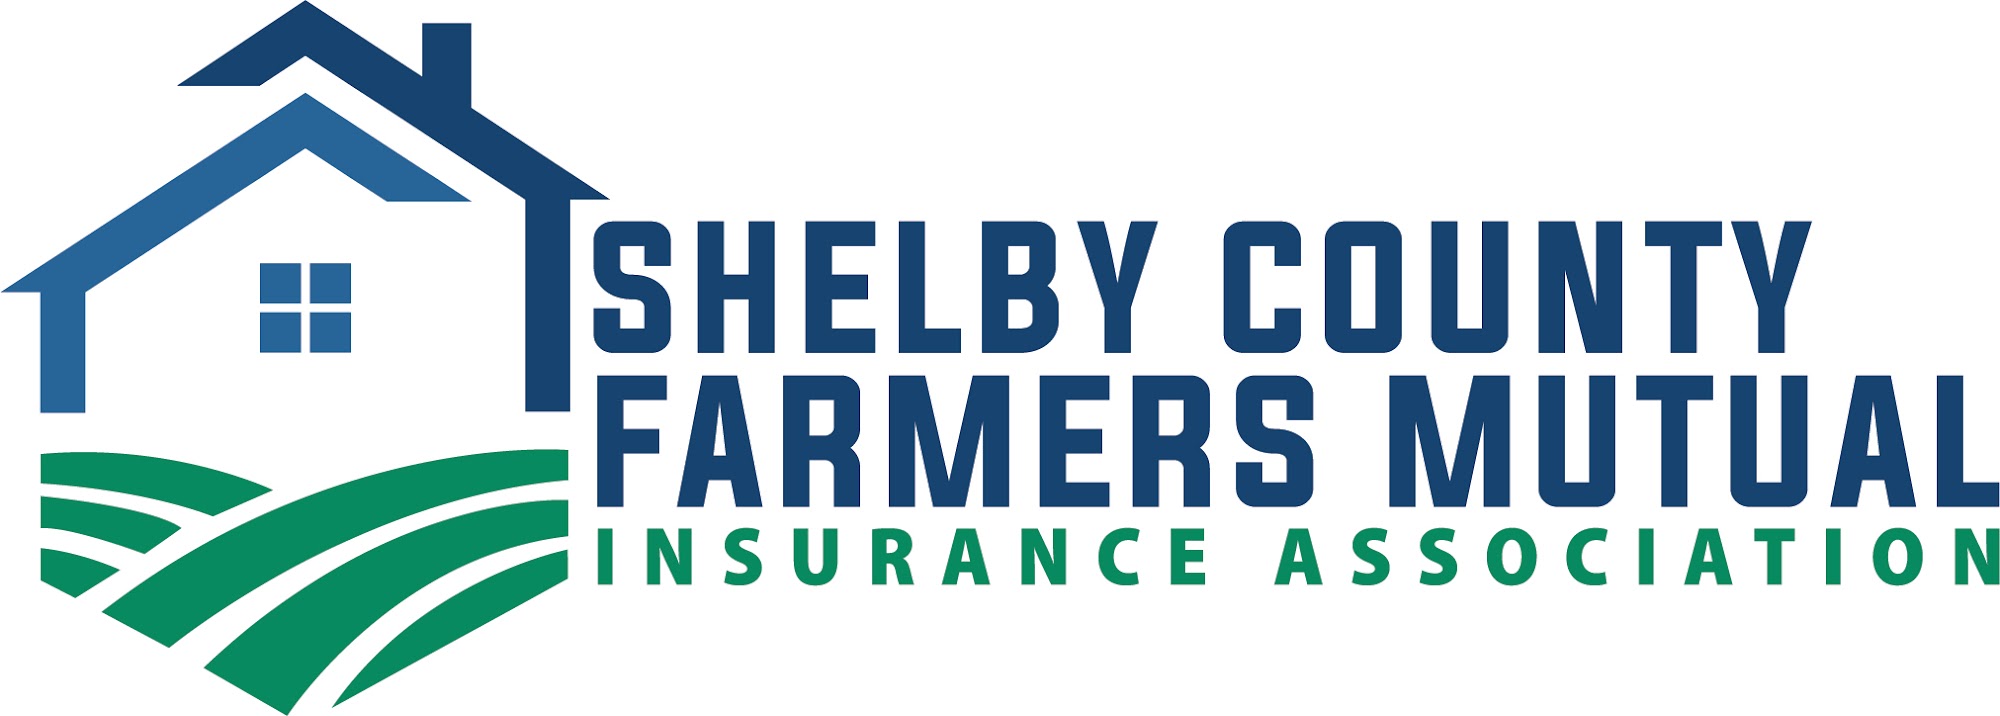 Shelby County Farmers Mutual Insurance Association